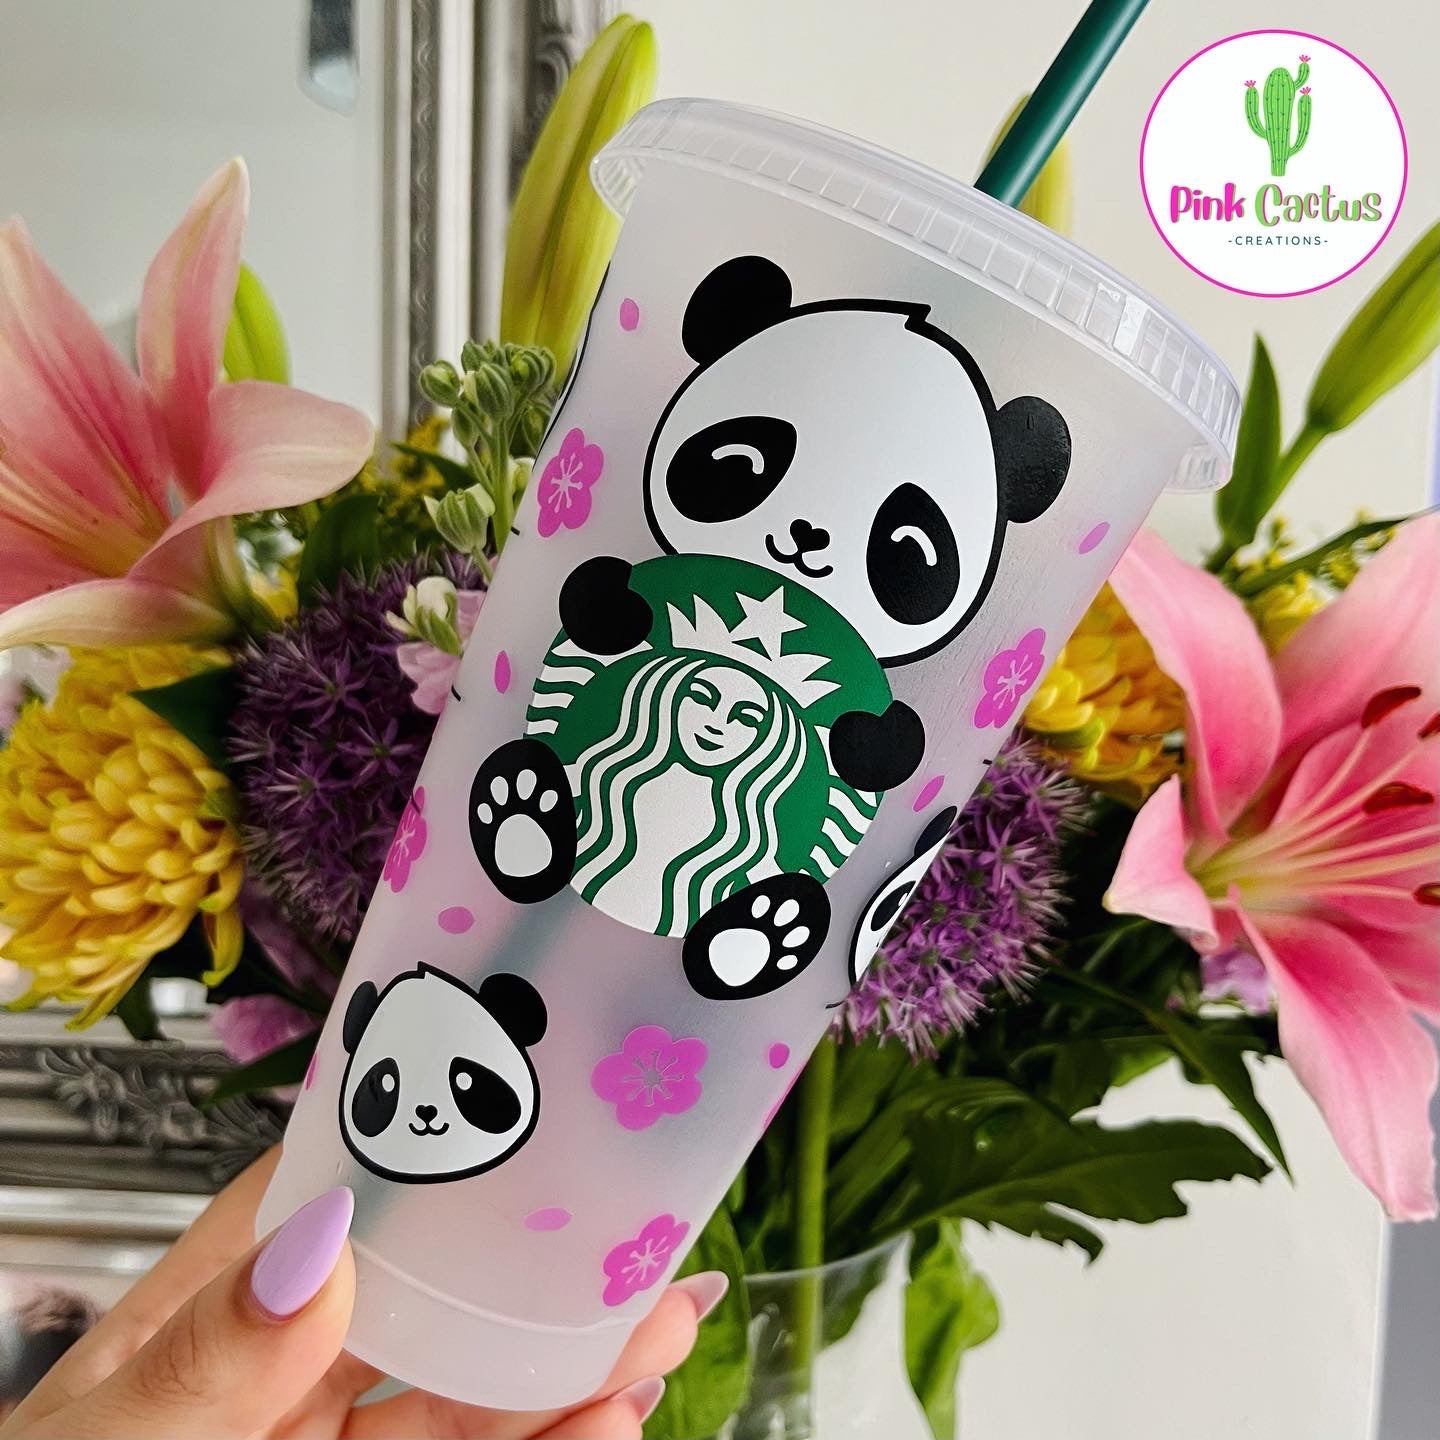 Starbucks 24oz Cold Cup With Panda Design